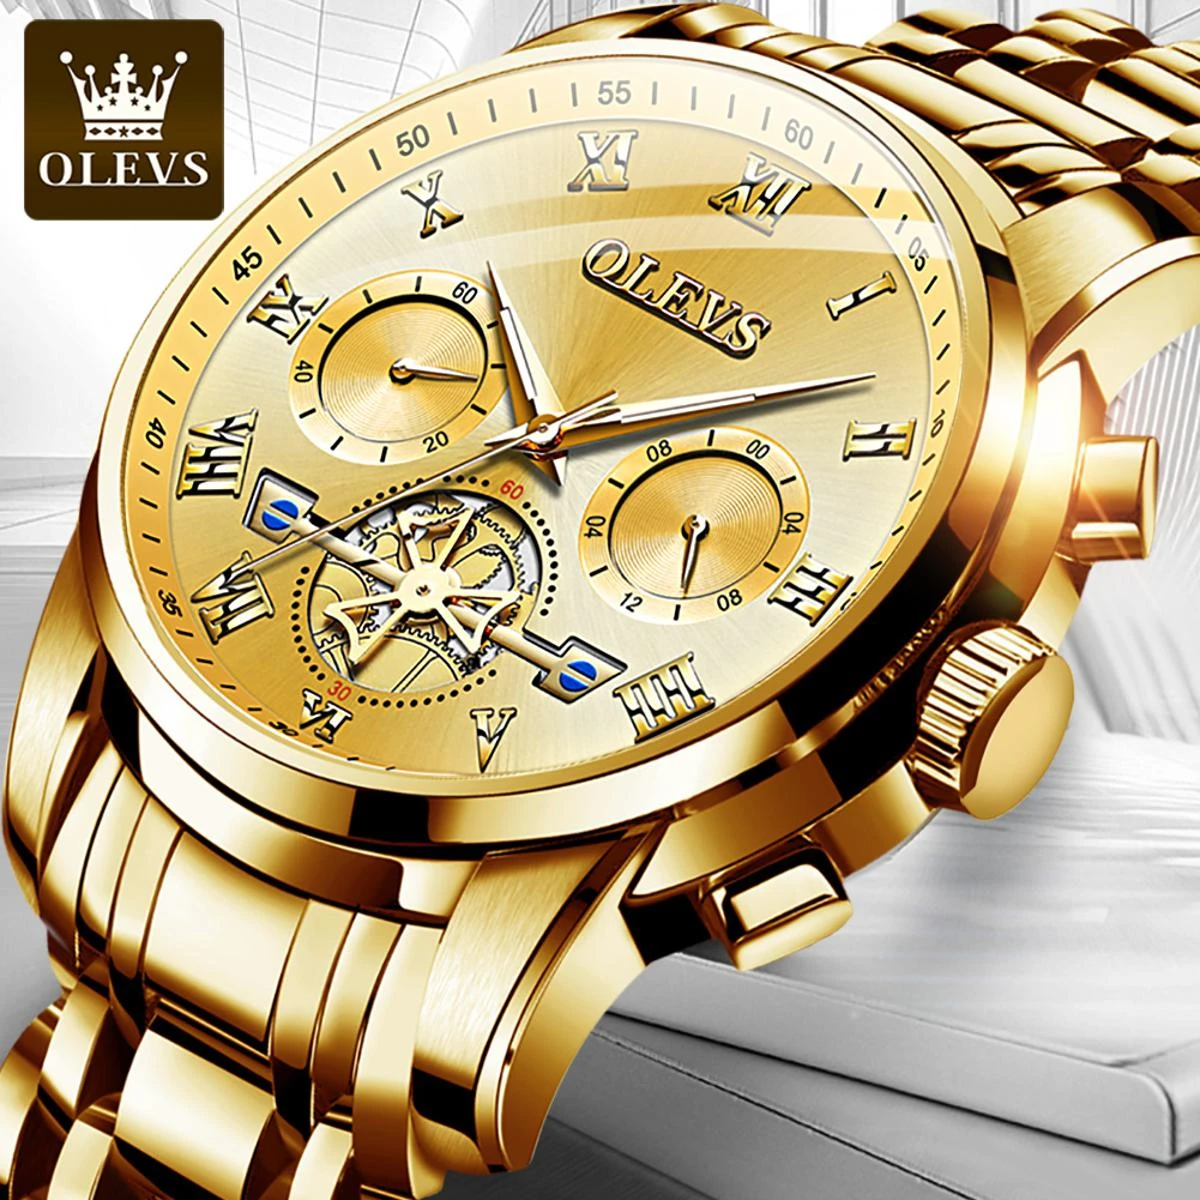 Olevs 2859 Stainless Steel premium quality waterproof Chronograph Watch-  Golden